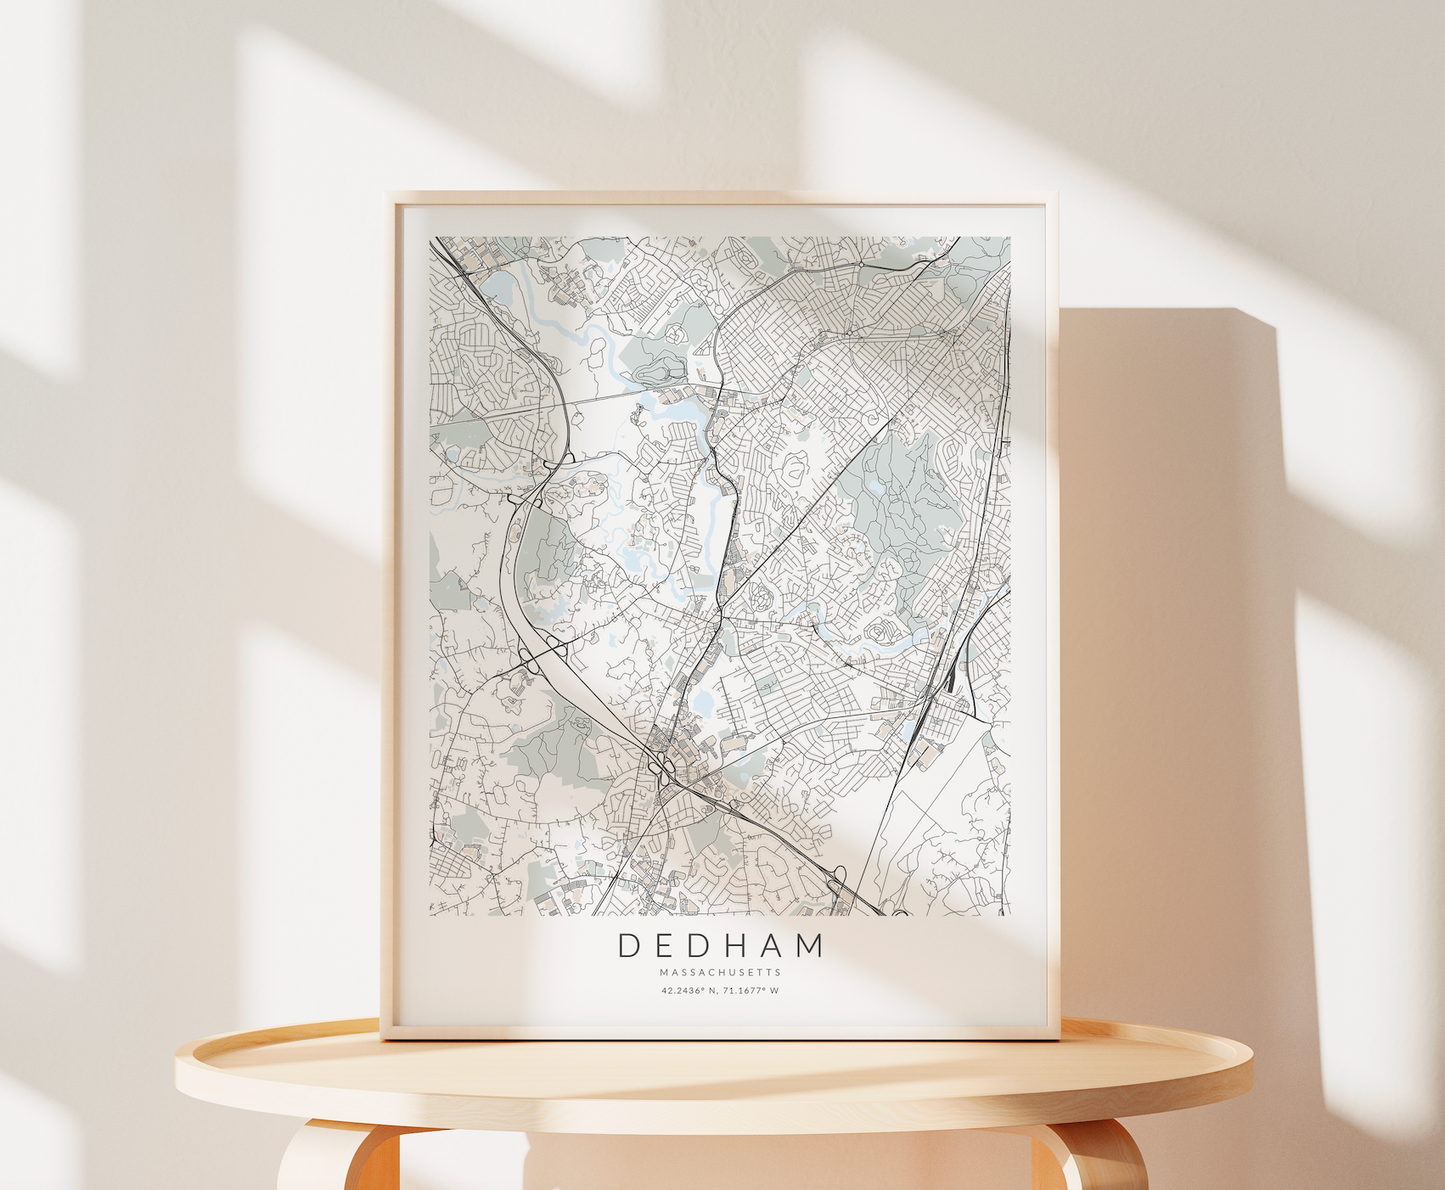 Dedham Map Print